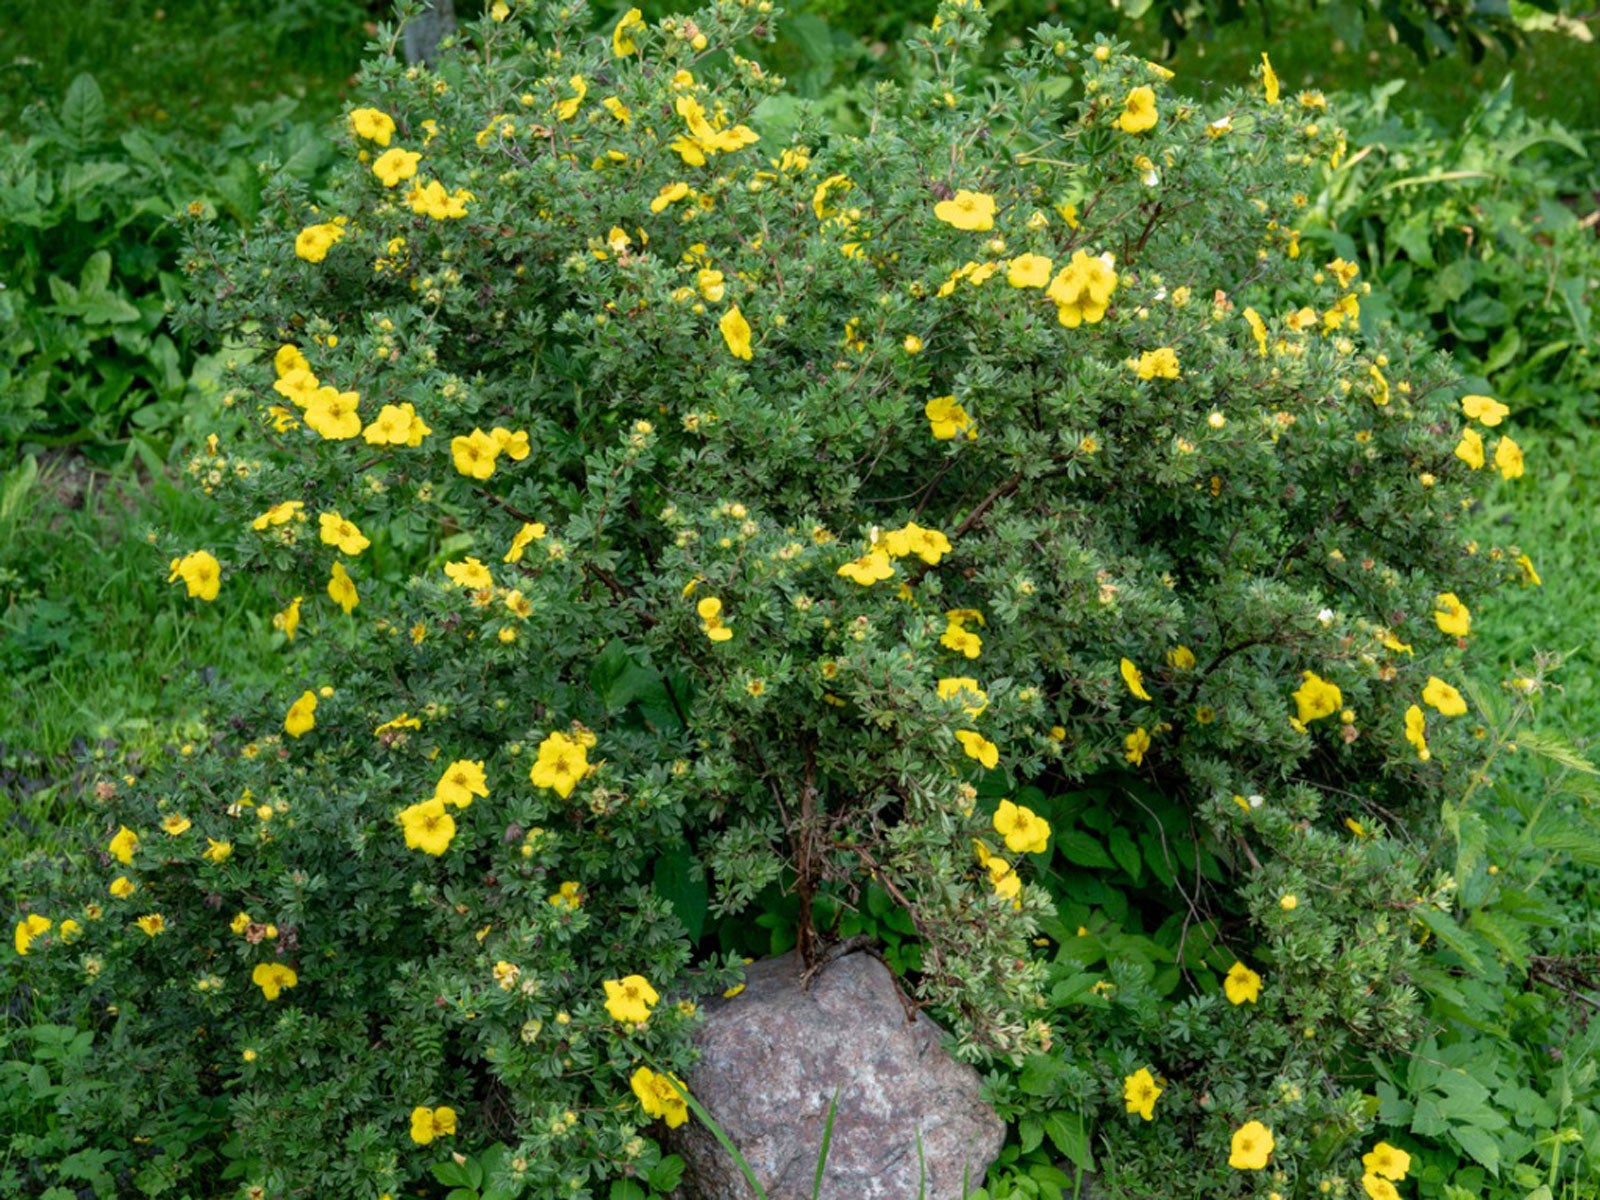 shrubby potentilla info - how to care for potentilla shrubs